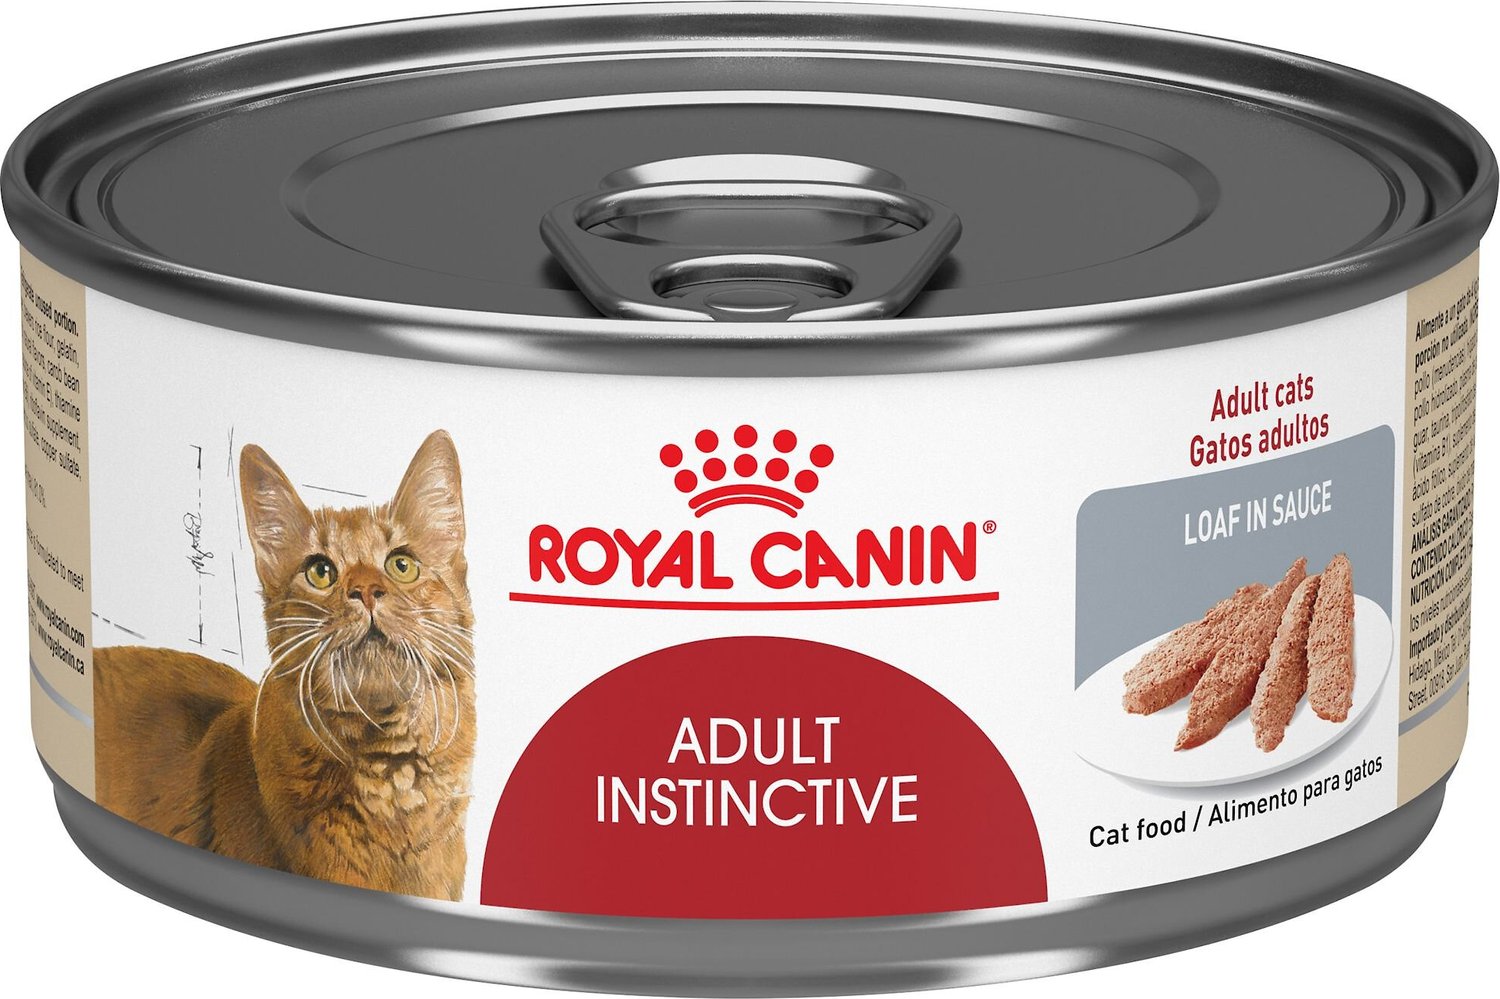 Royal Canin Adult Instinctive Loaf in Sauce Canned Cat Food, 5.8oz